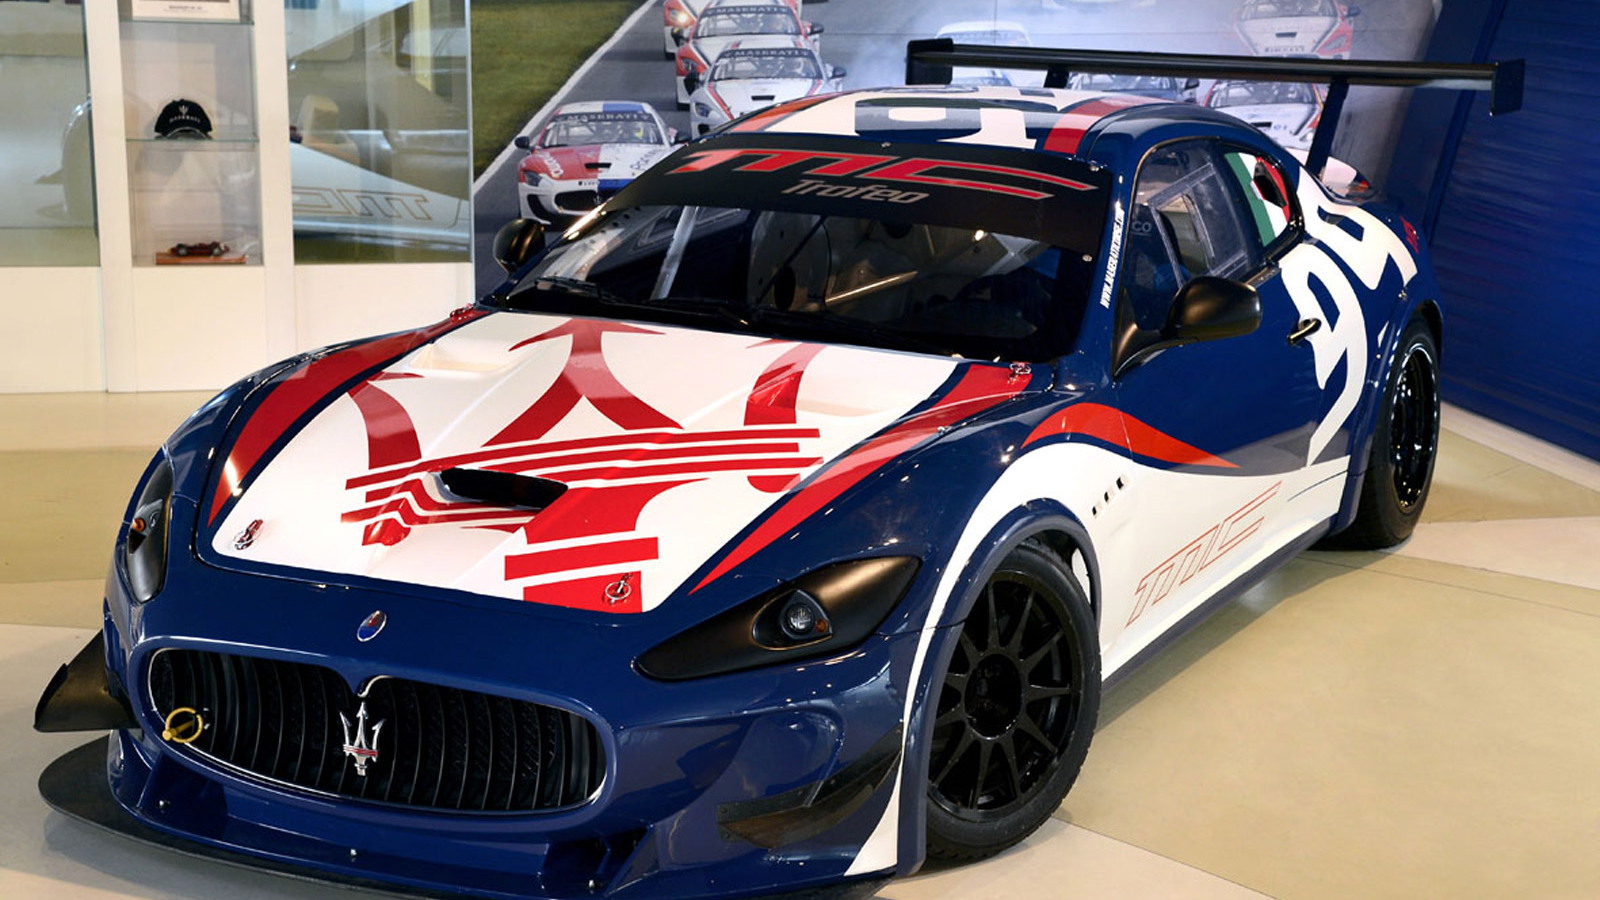 2013 Maserati GranTurismo MC Trofeo race car